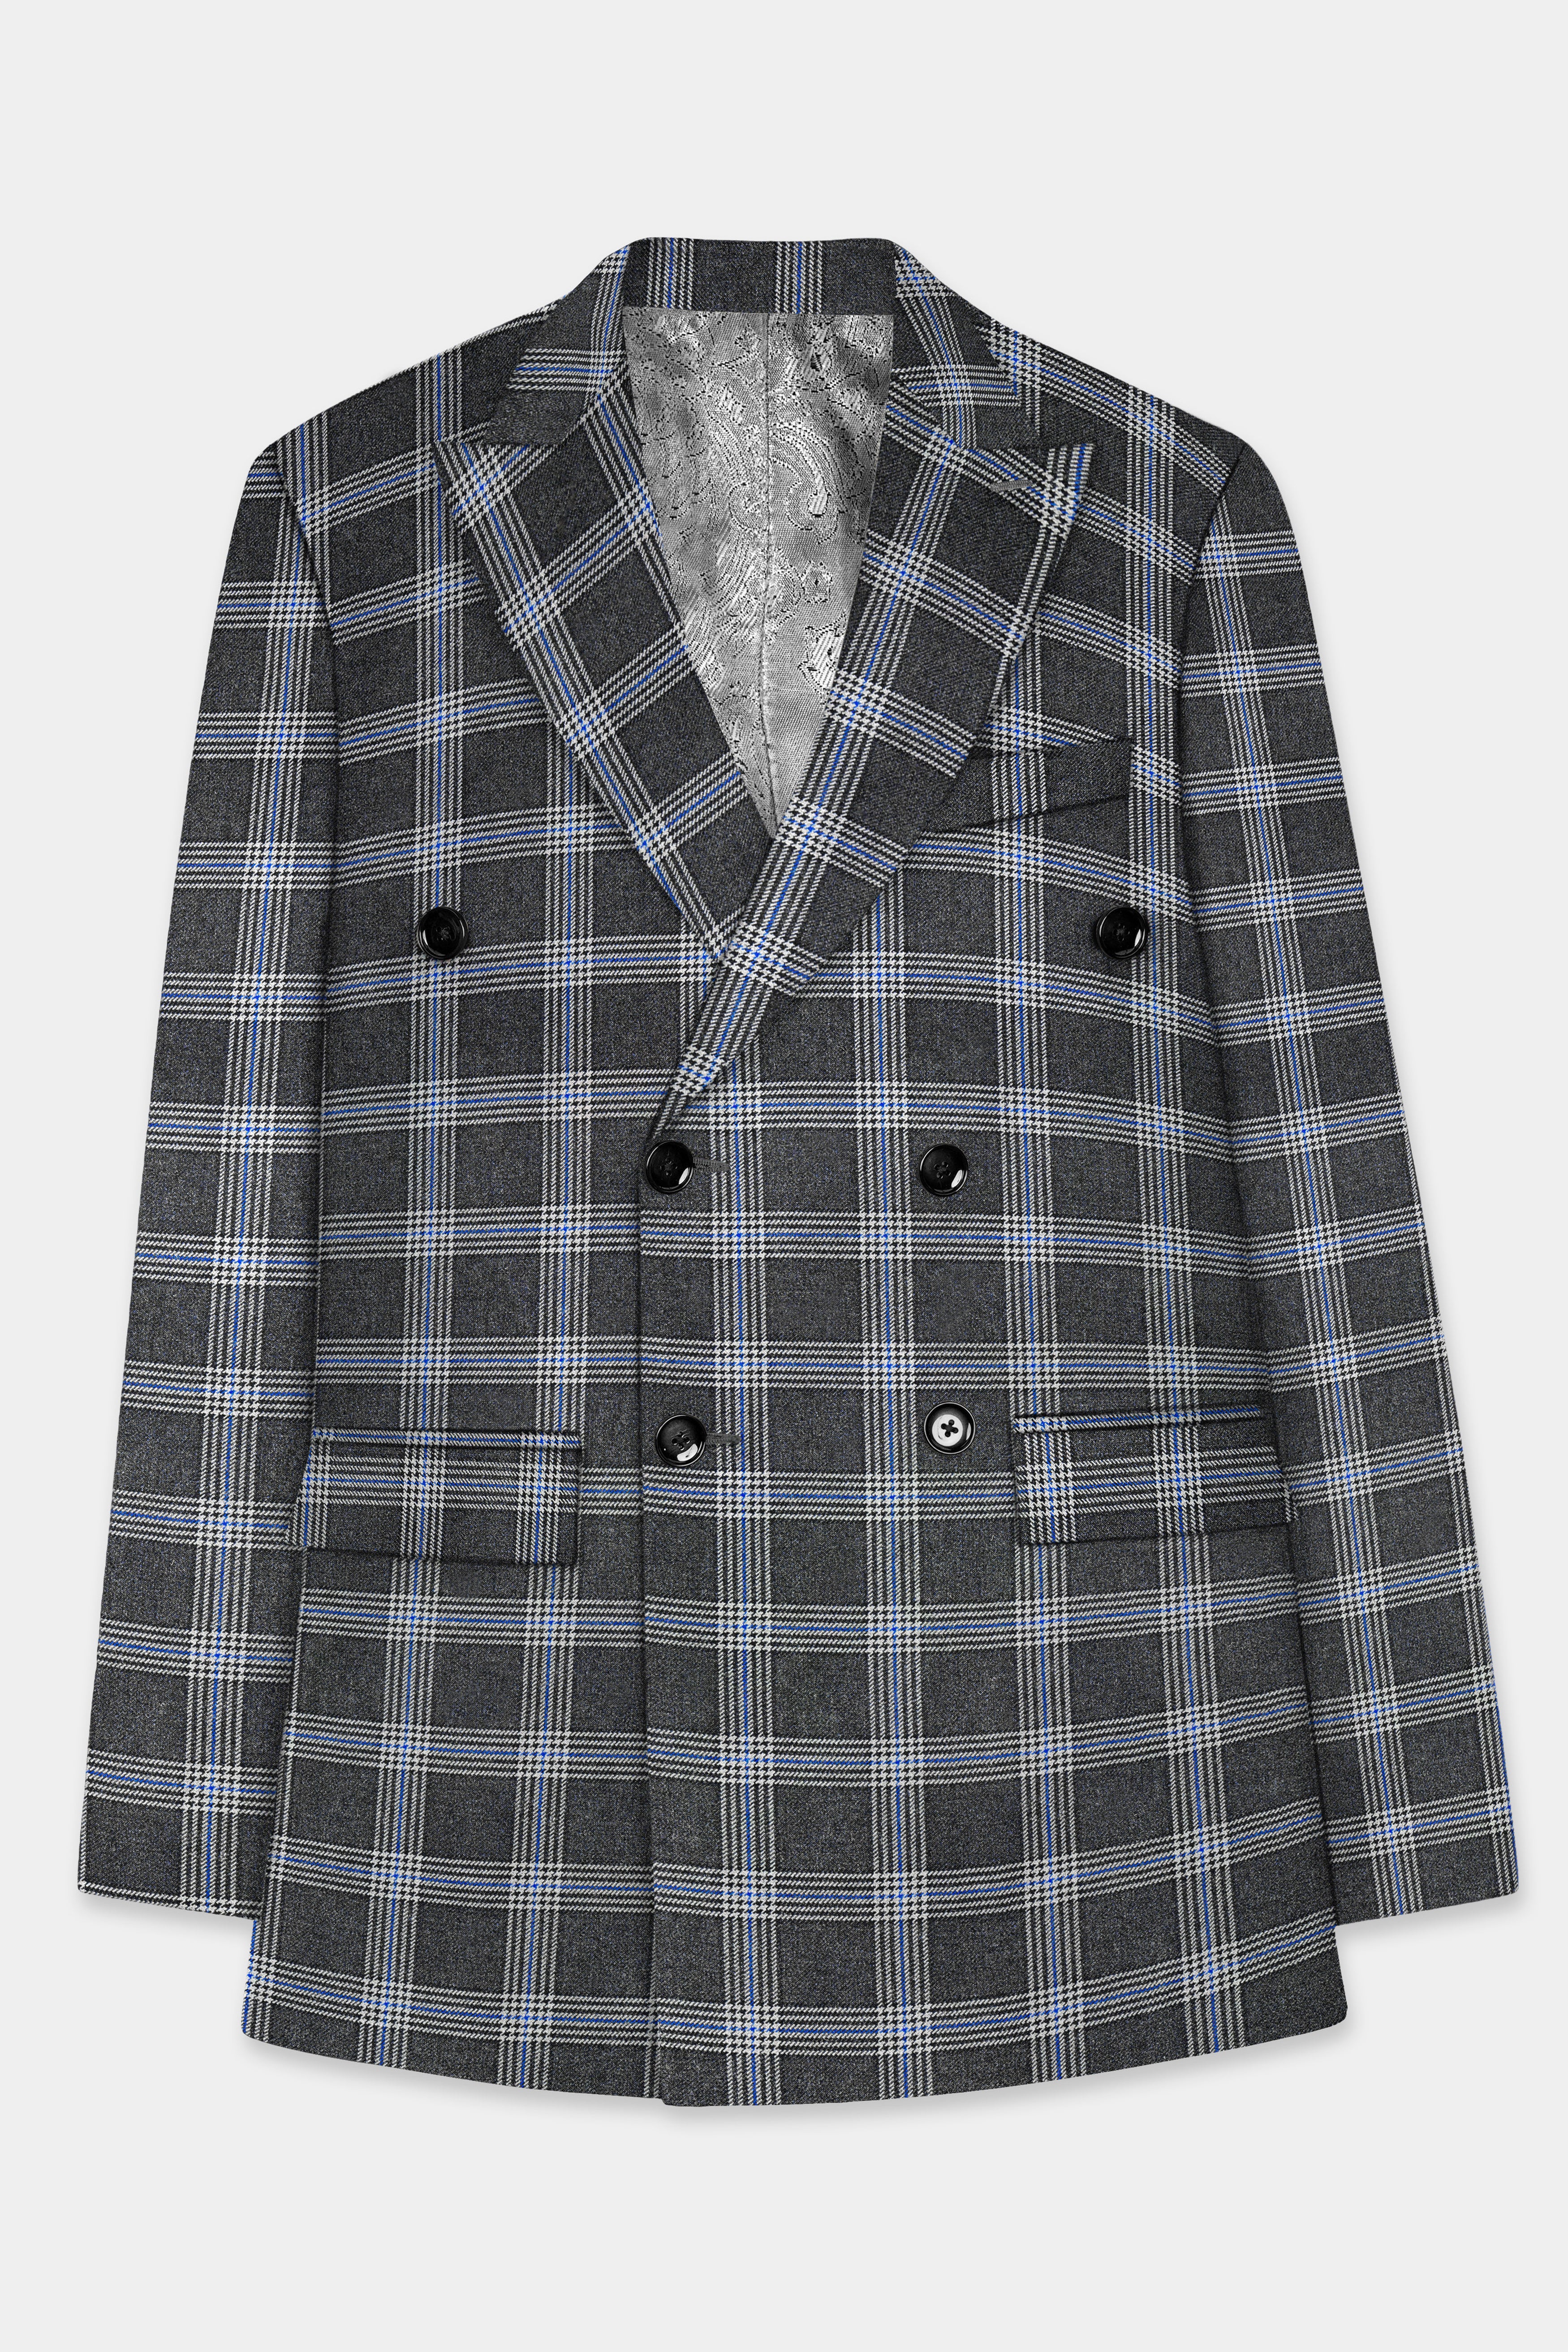 Iridium Gray Plaid Tweed Double Breasted Suit